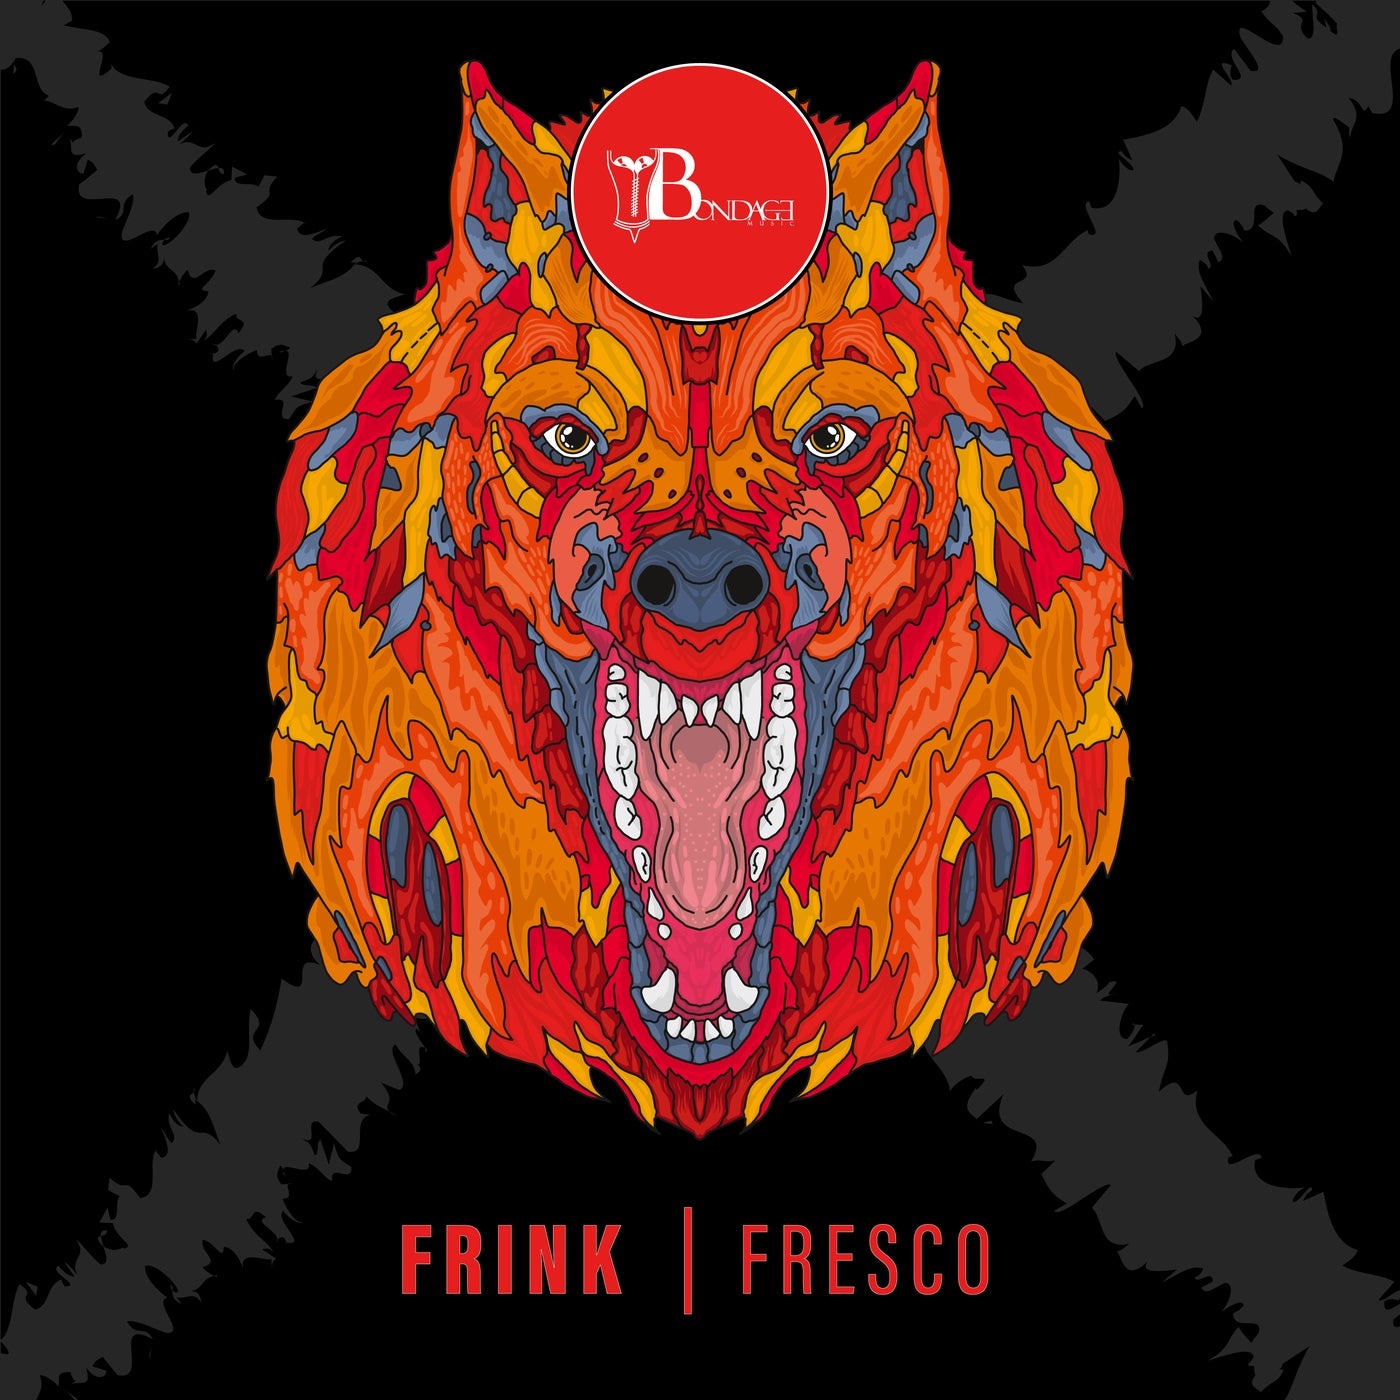 image cover: James Dexter, Frink - Fresco / BOND12061